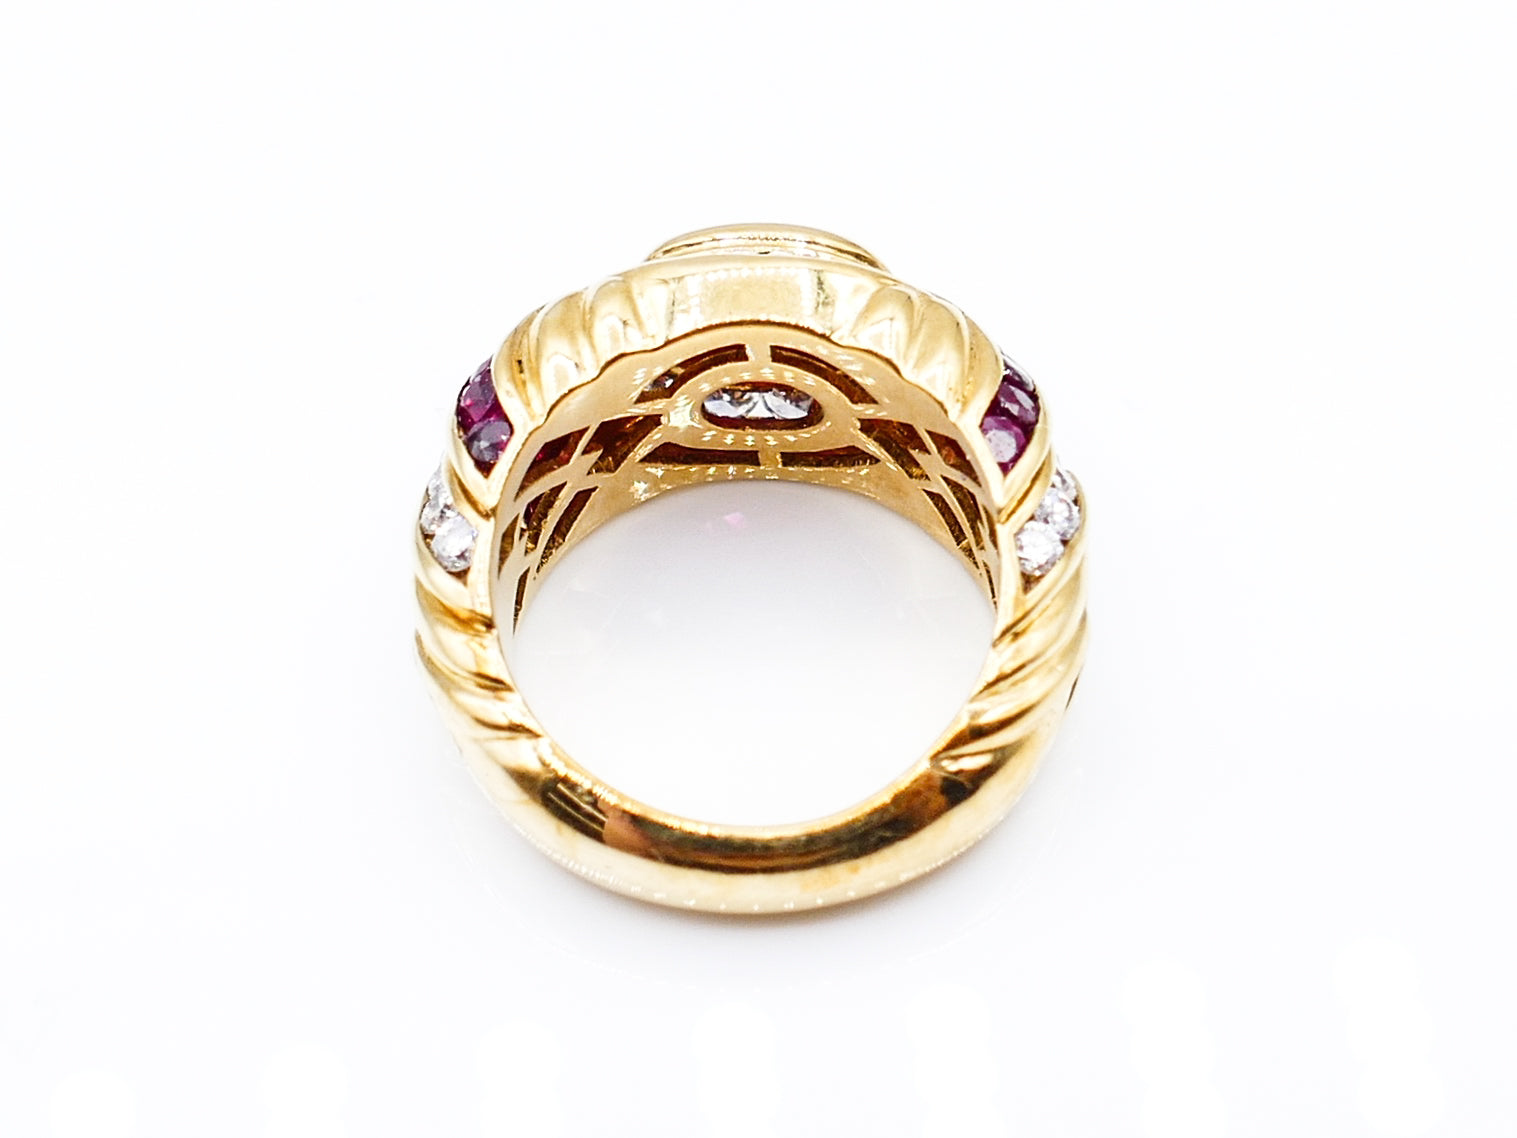 Italian Designed Vintage Ruby Diamond Gold Ring